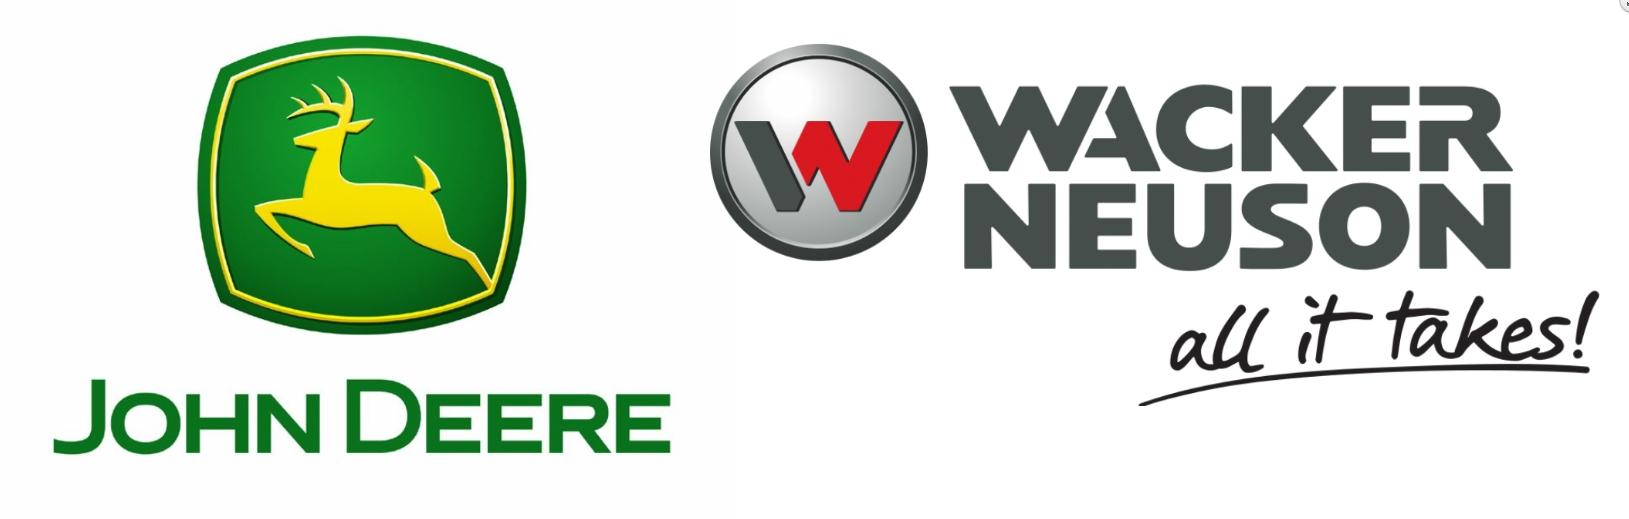 John Deere and Wacker Neuson agreement